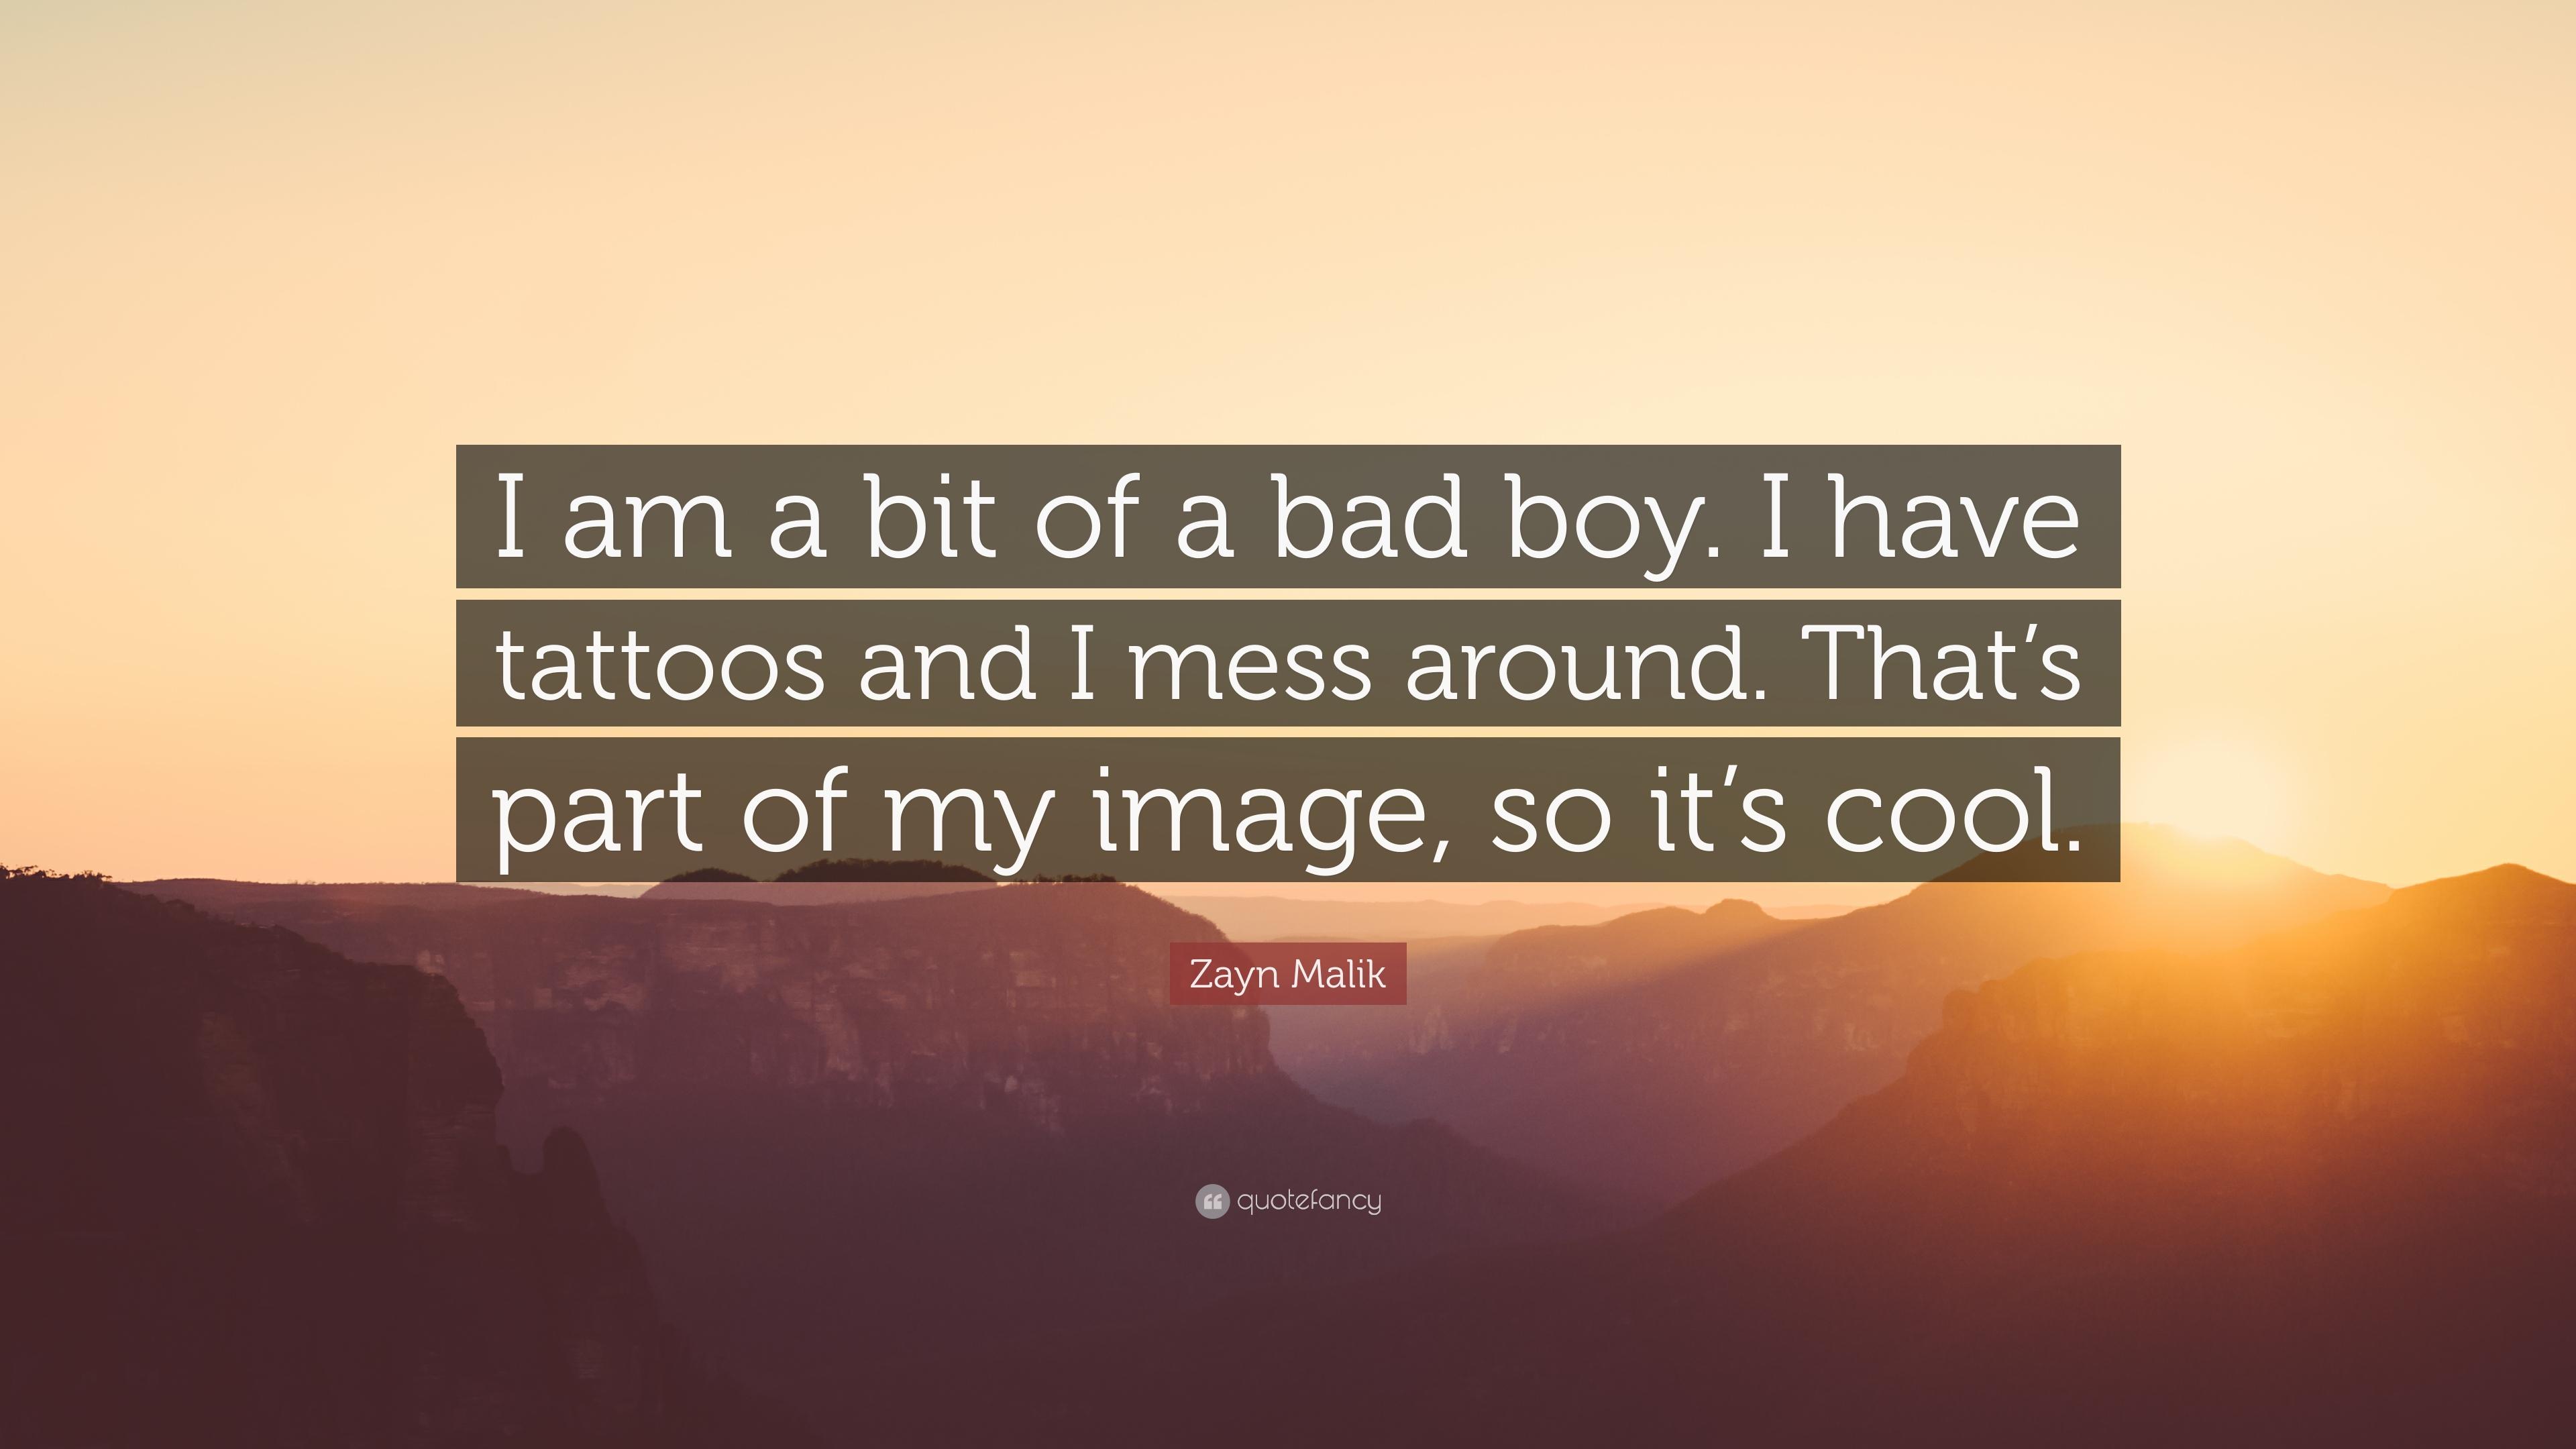 Zayn Malik Quote: “I am a bit of a bad boy. I have tattoos and I